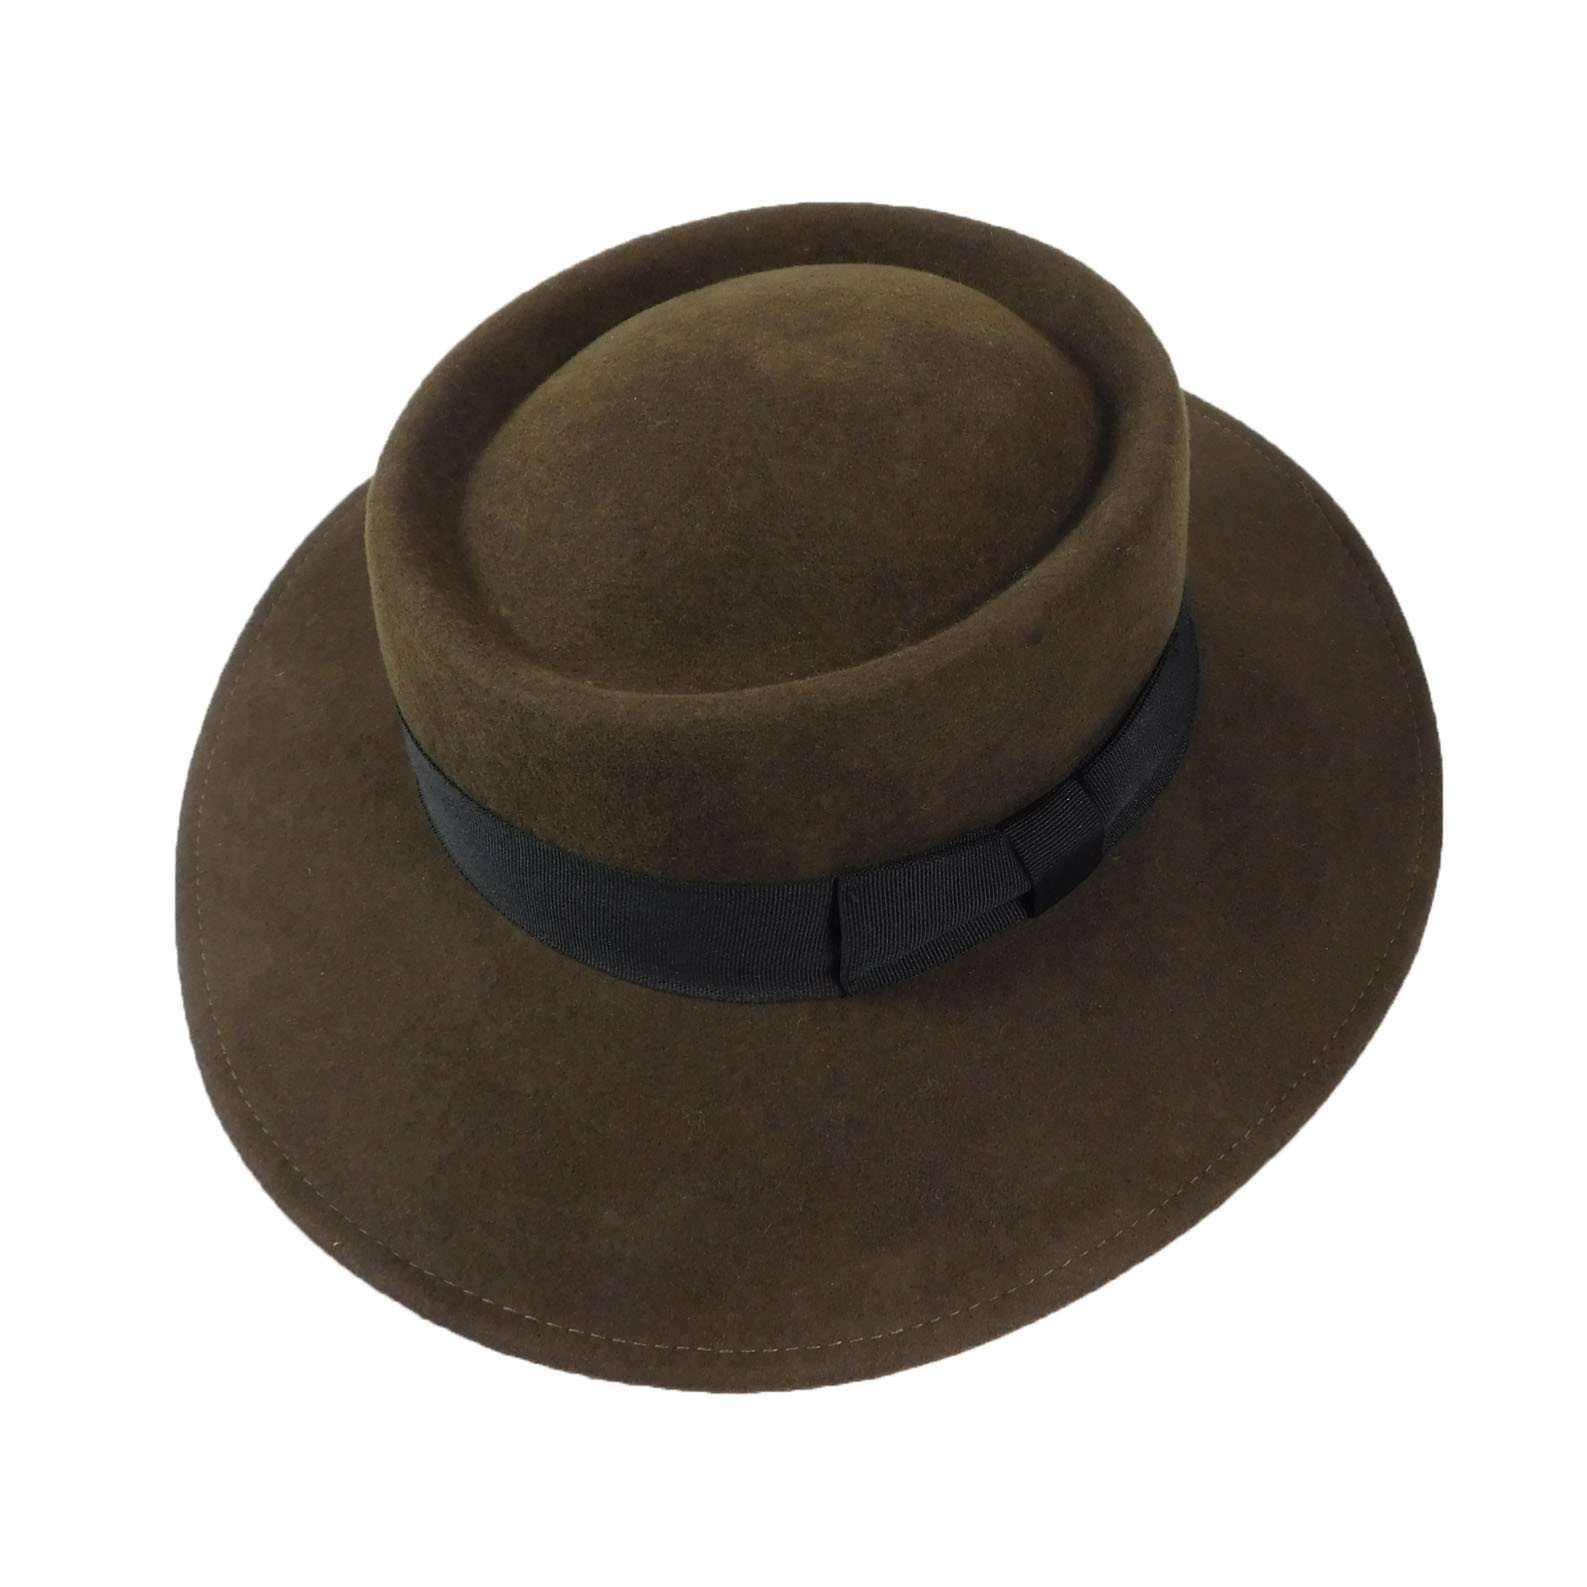 Wool Felt Bolero -Tan and Brown Bolero Hat SetarTrading Hats WWWF161BN Brown  